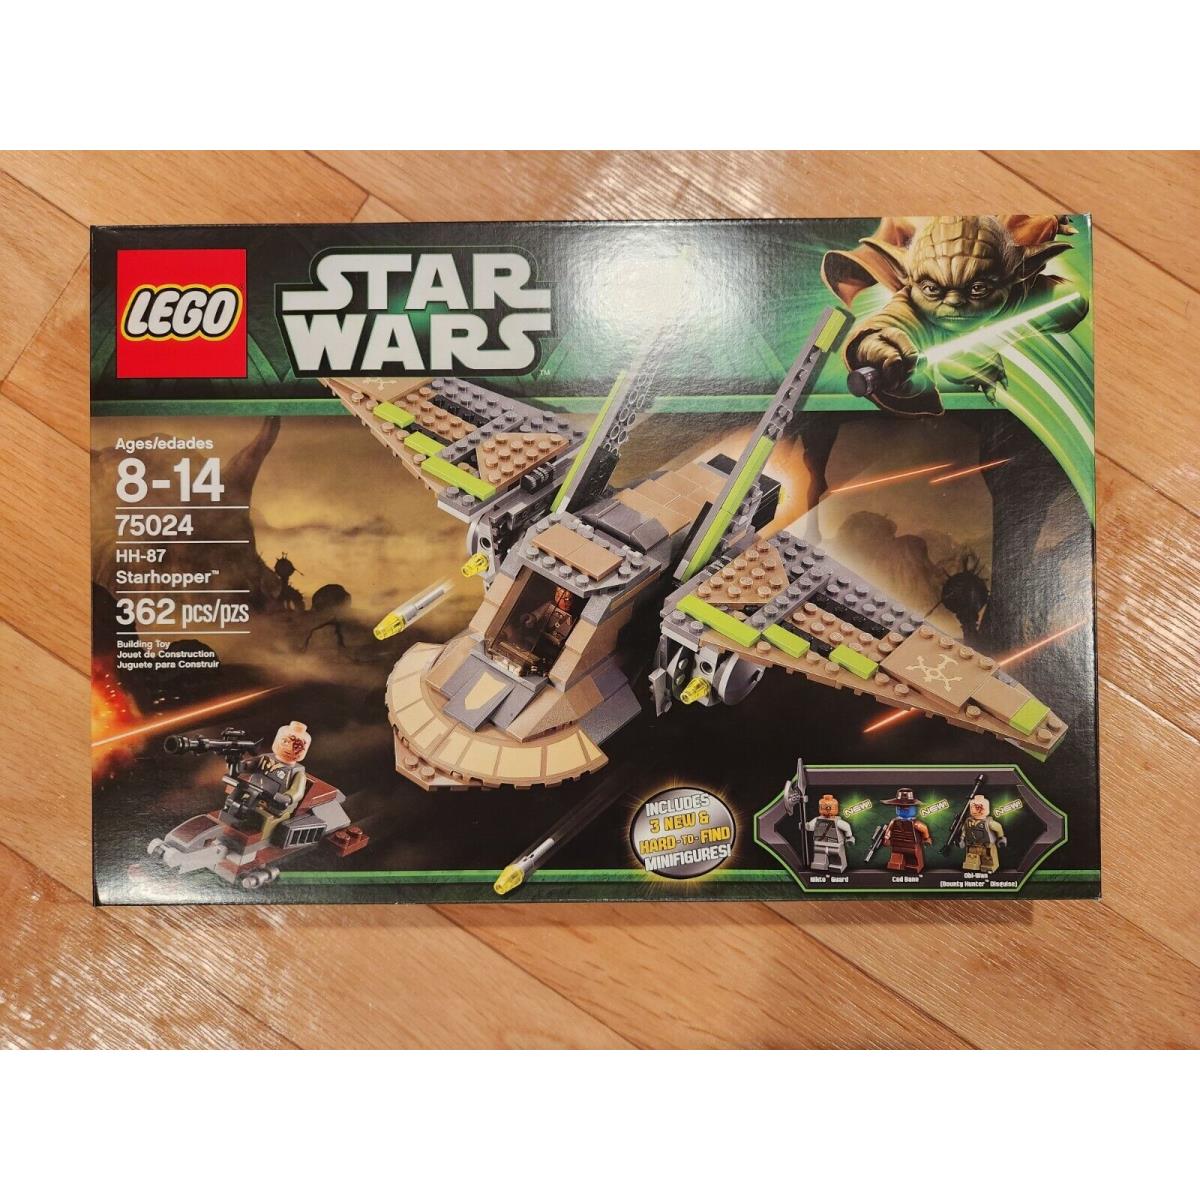 Lego Star Wars 75024: HH-87 Starhopper